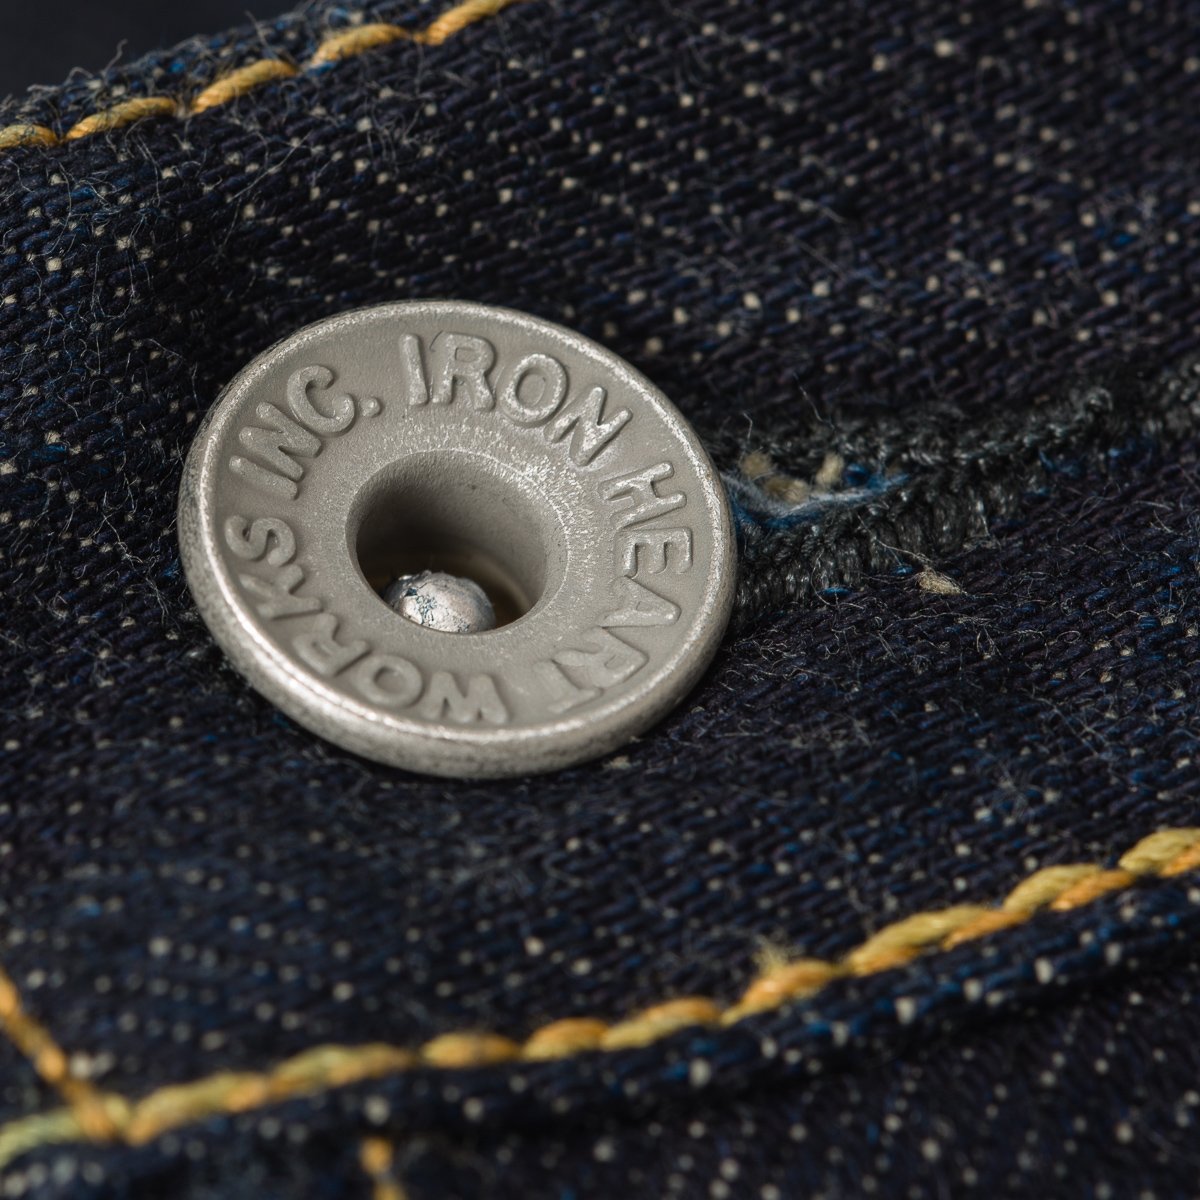 Iron Heart 17oz Selvedge Denim Straight Cut Jeans - Natural Indigo